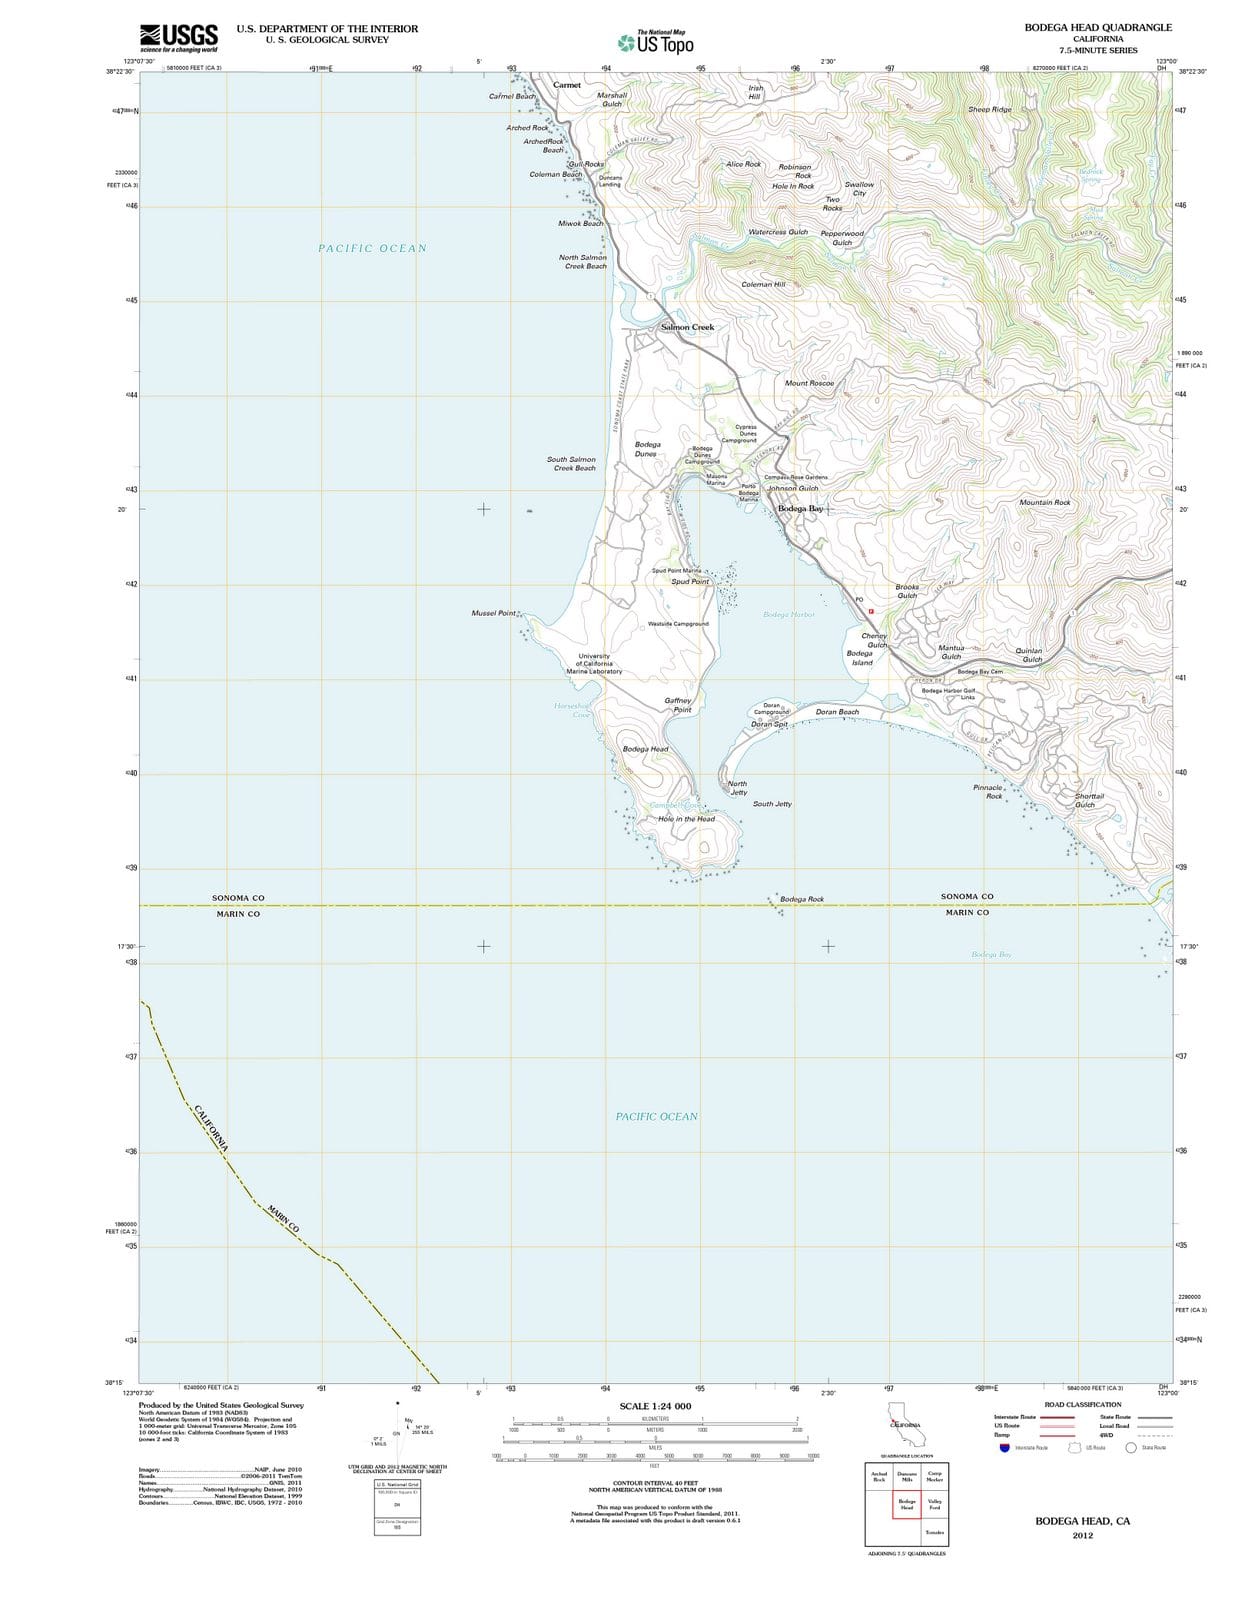 2012 Bodega Head, CA - California - USGS Topographic Map